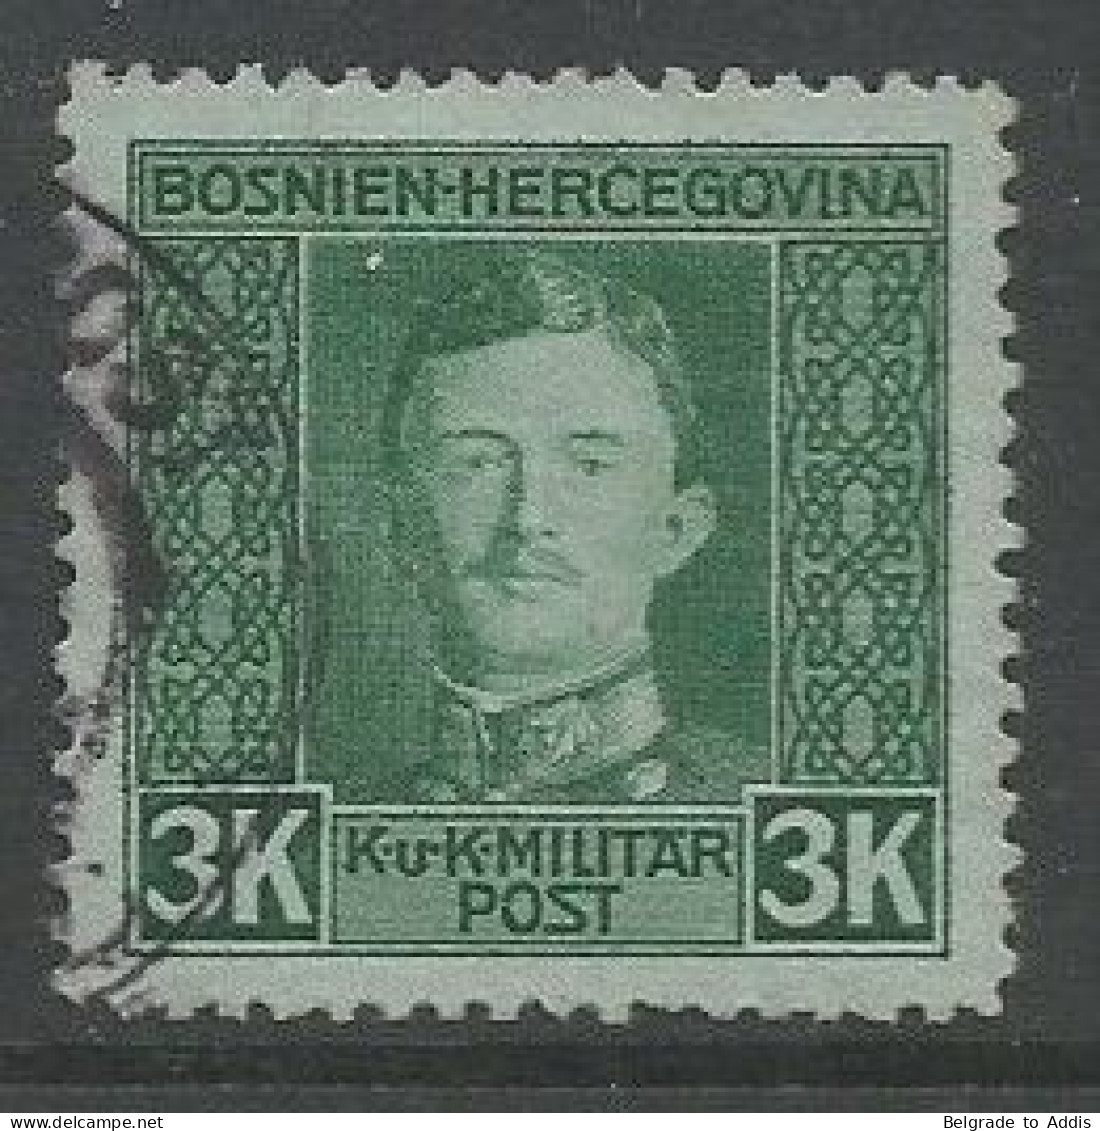 Bosnia Bosnien K.u.K. Austria Hungary Mi.139 Used 1917 Old Signature On Back - Bosnie-Herzegovine